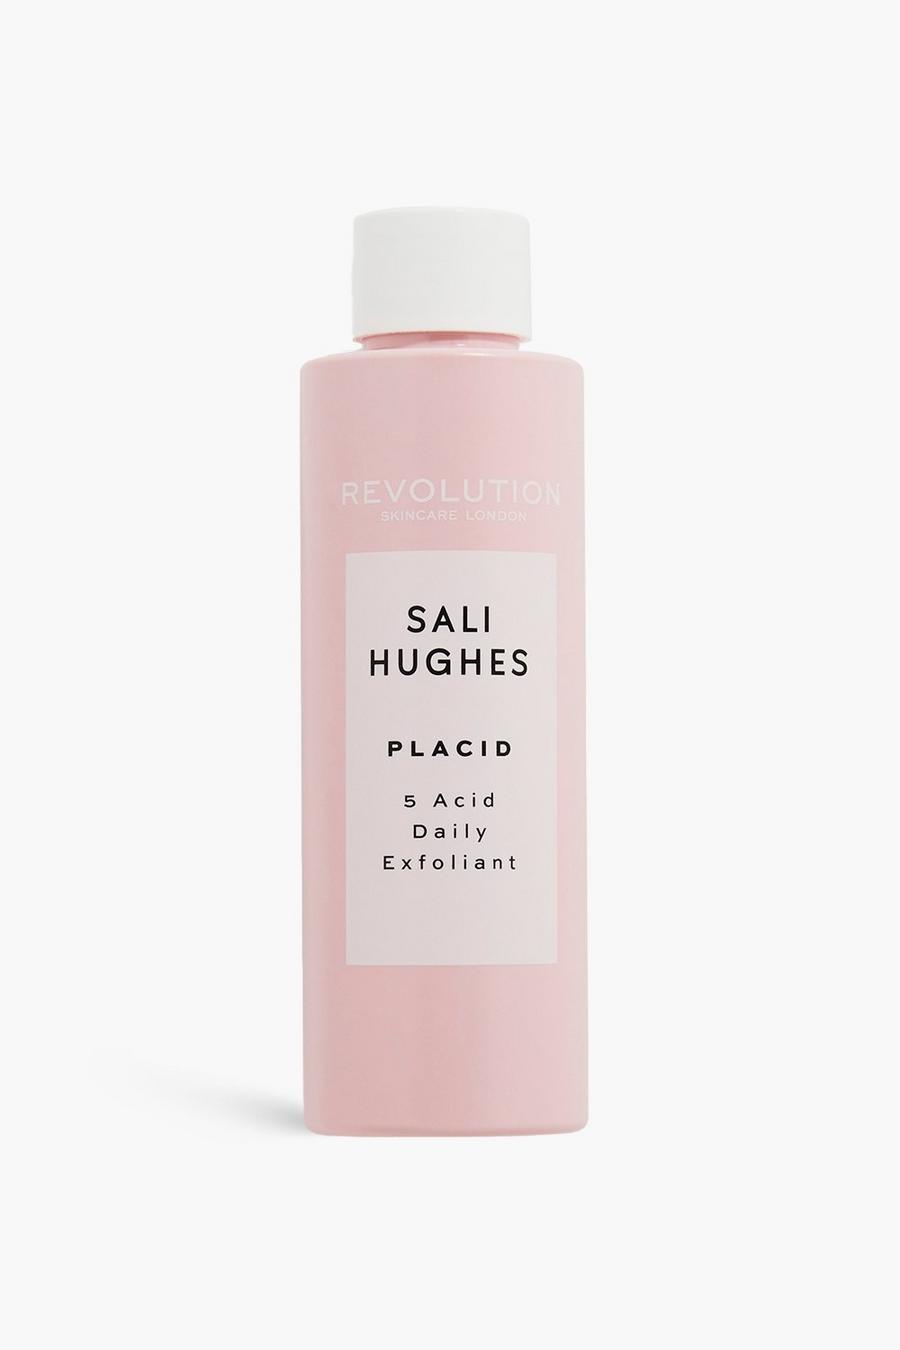 Revolution Skin X Sali Hughes - Esfoliante a base di 5 acidi, Pink